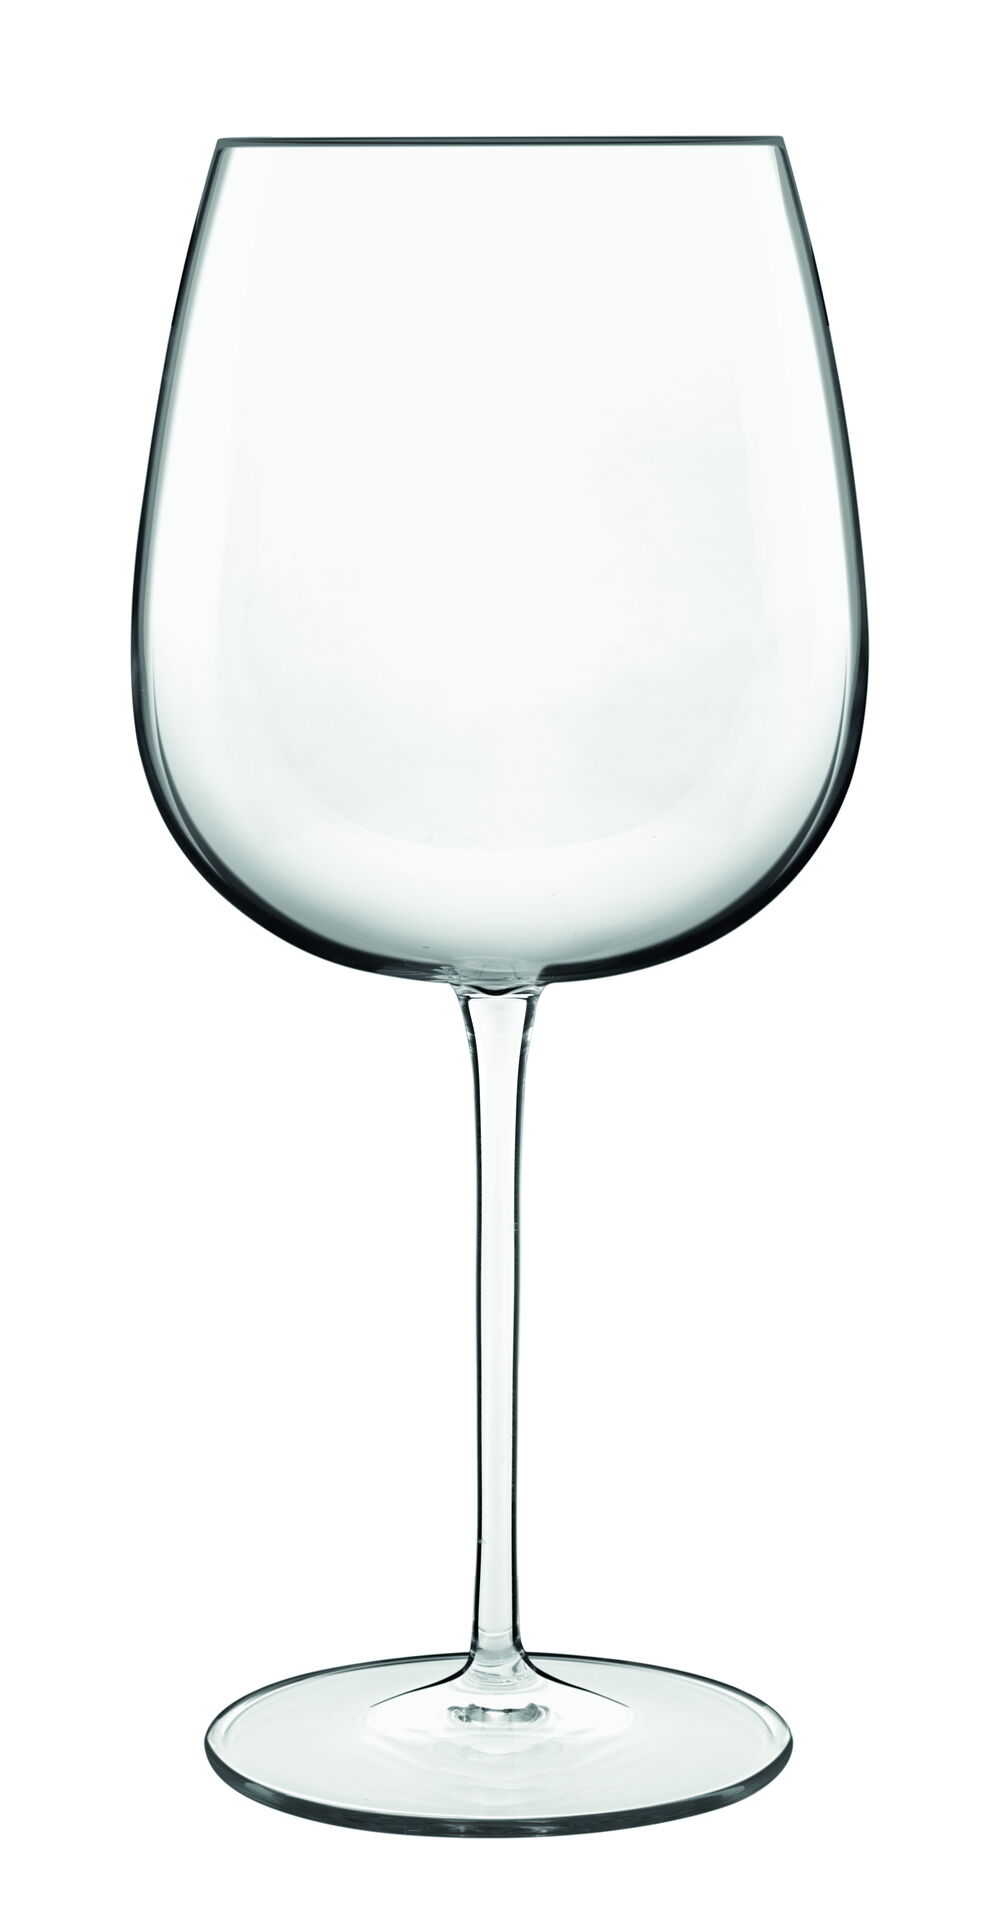 Набор бокалов для красного вина Талисман Бургунди 750 мл, 4 шт, стекло хрустальное, Luigi Bormioli - фото 3